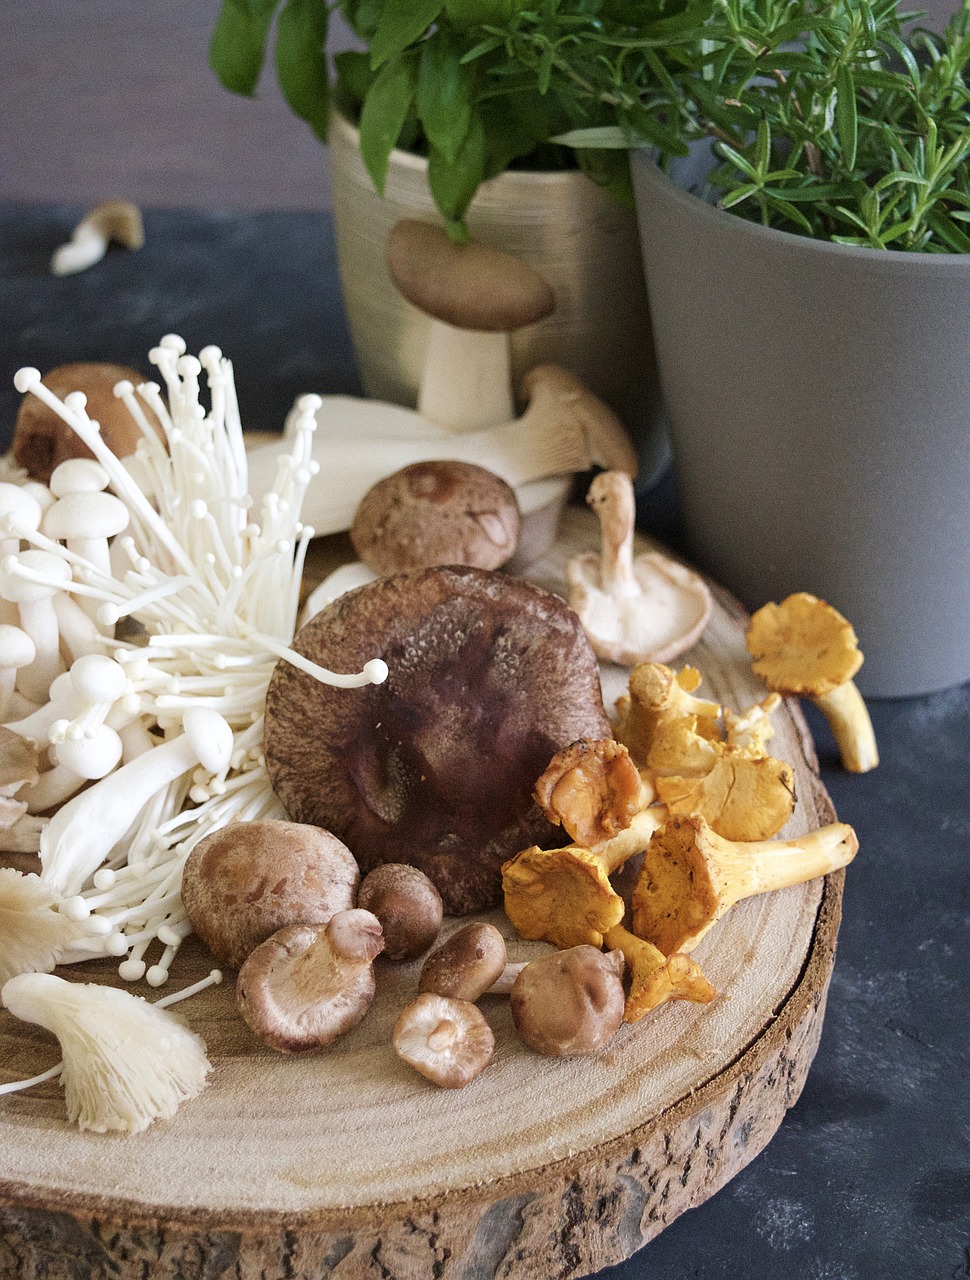 Importance of mushroom consumption